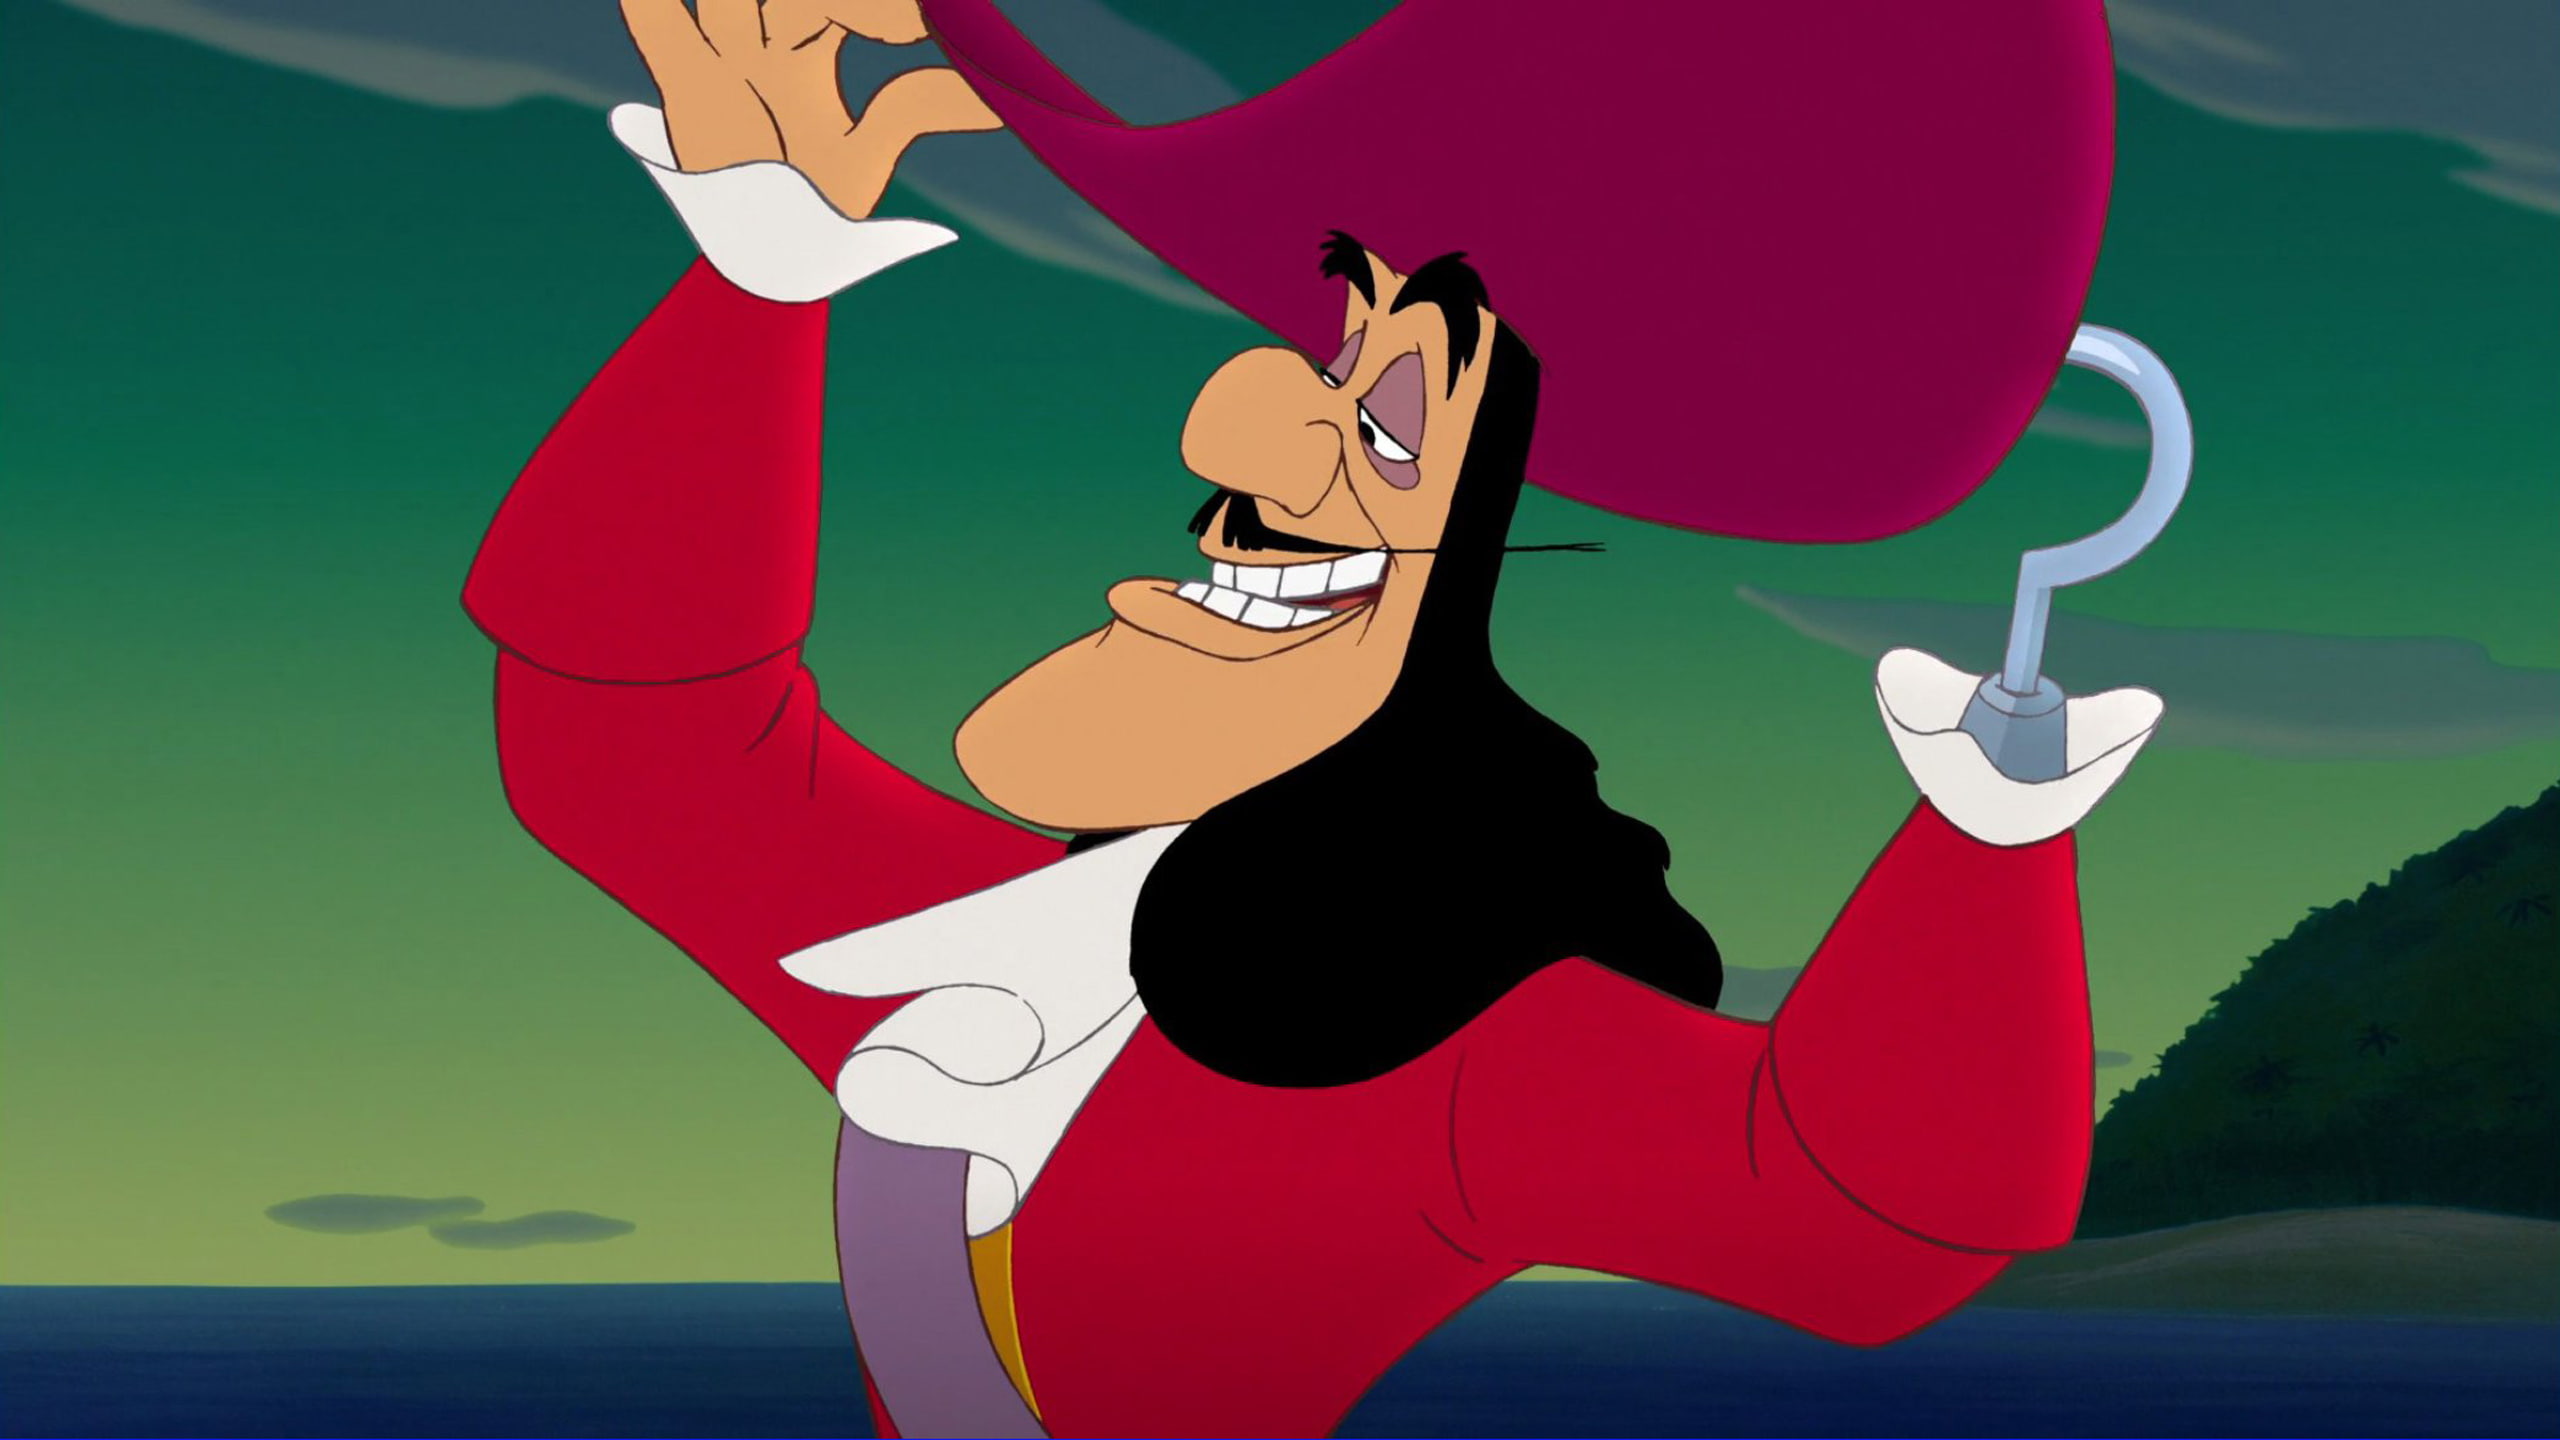 Captain Hook Character From Peter Pan Cartoon Walt Disney Screenshot Image 2560×1440